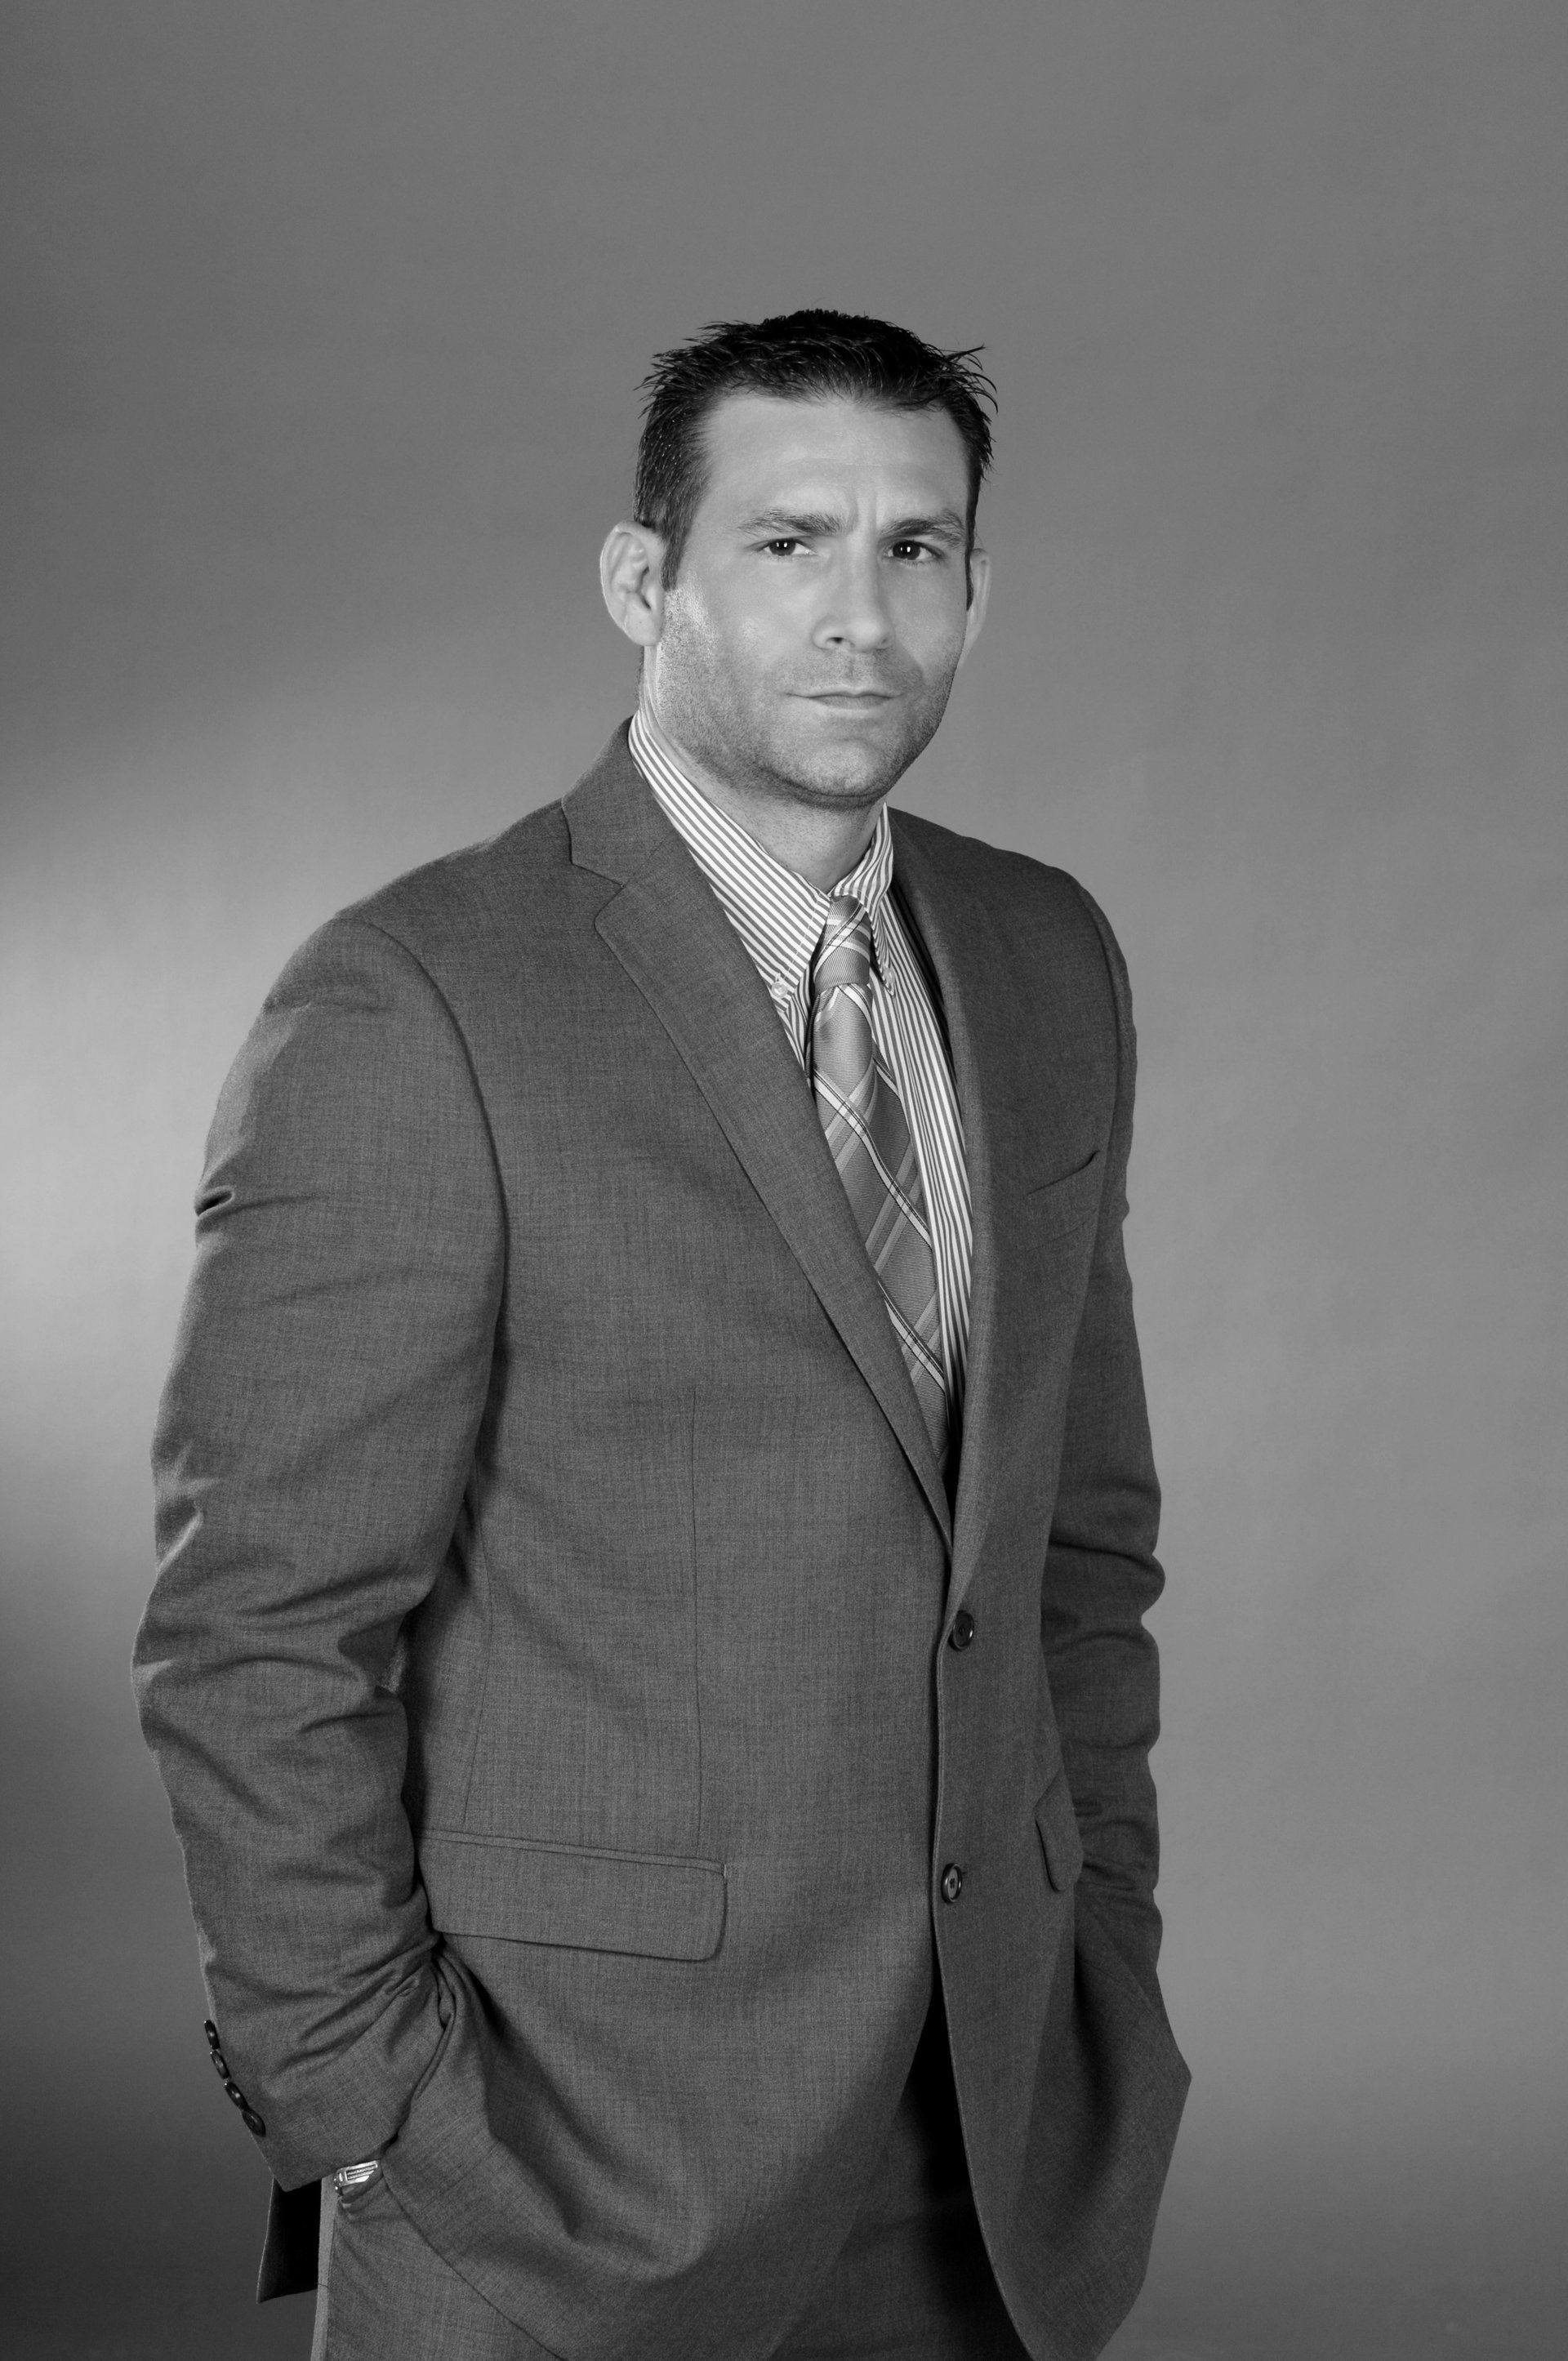 An image of Fort Lauderdale criminal defense attorney Antonio D. Quinn